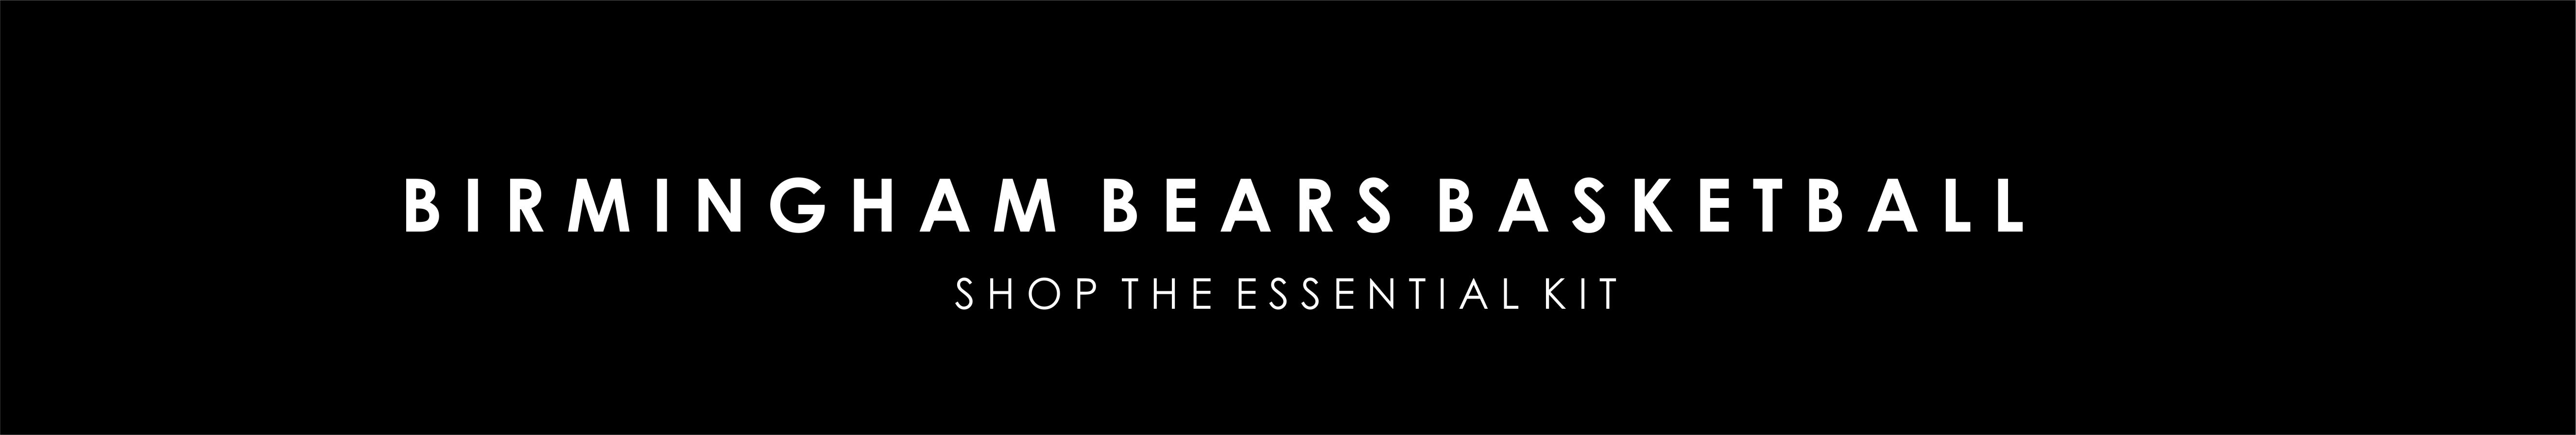 birmingham-bears-basketball-web-banner.jpg